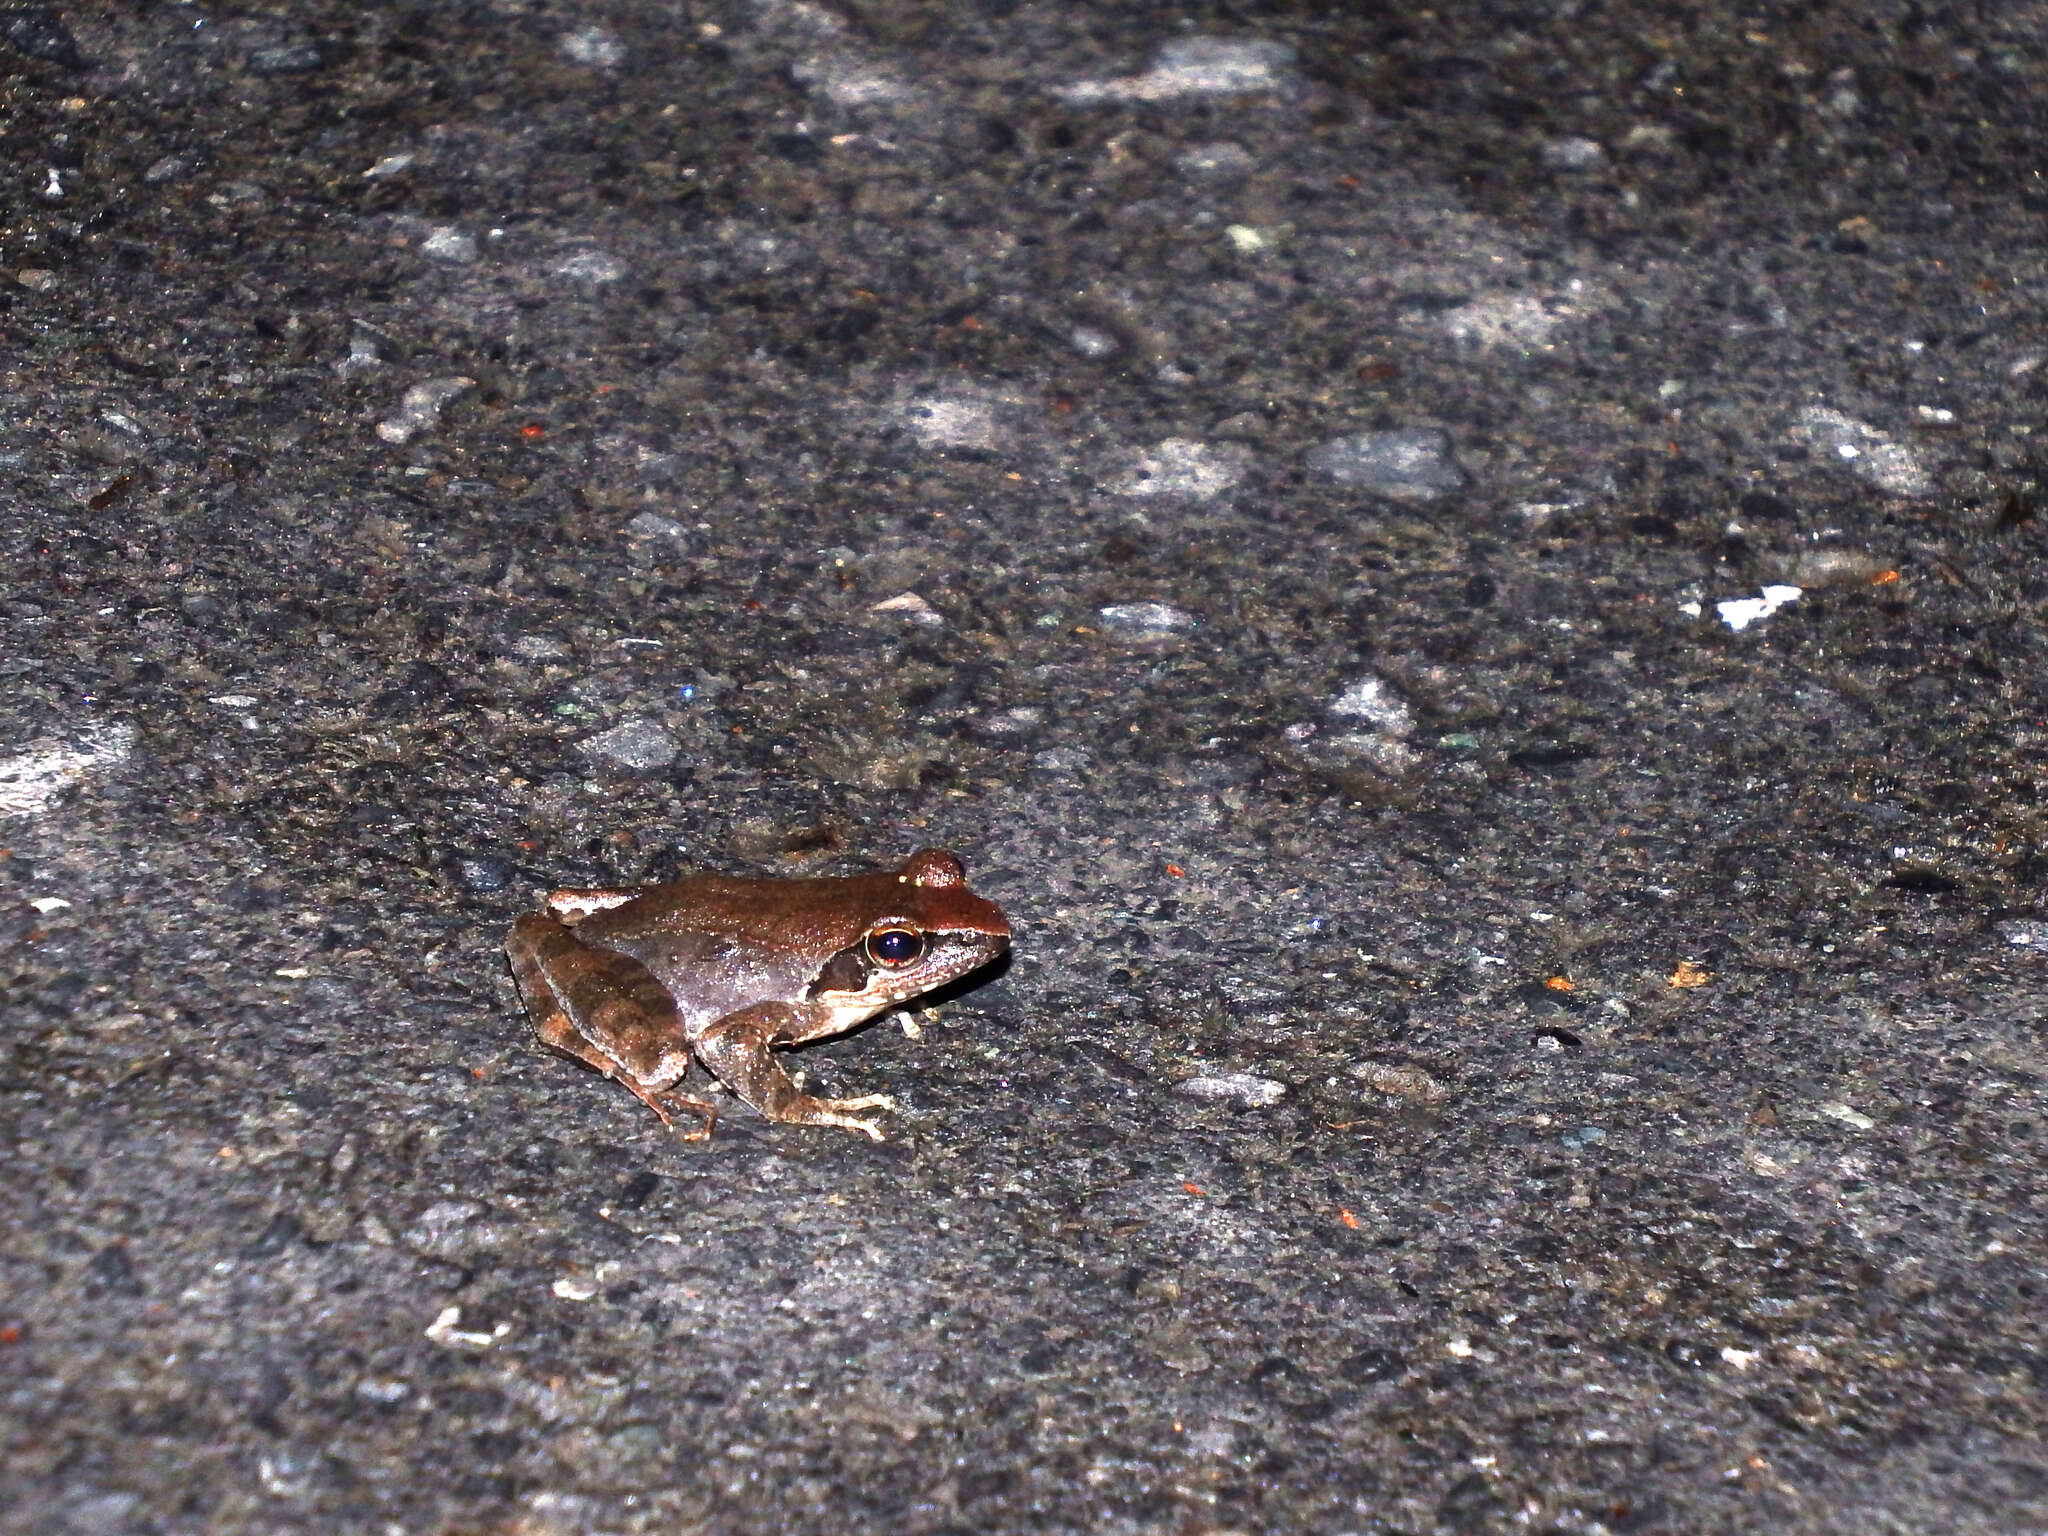 Image of Brown frog